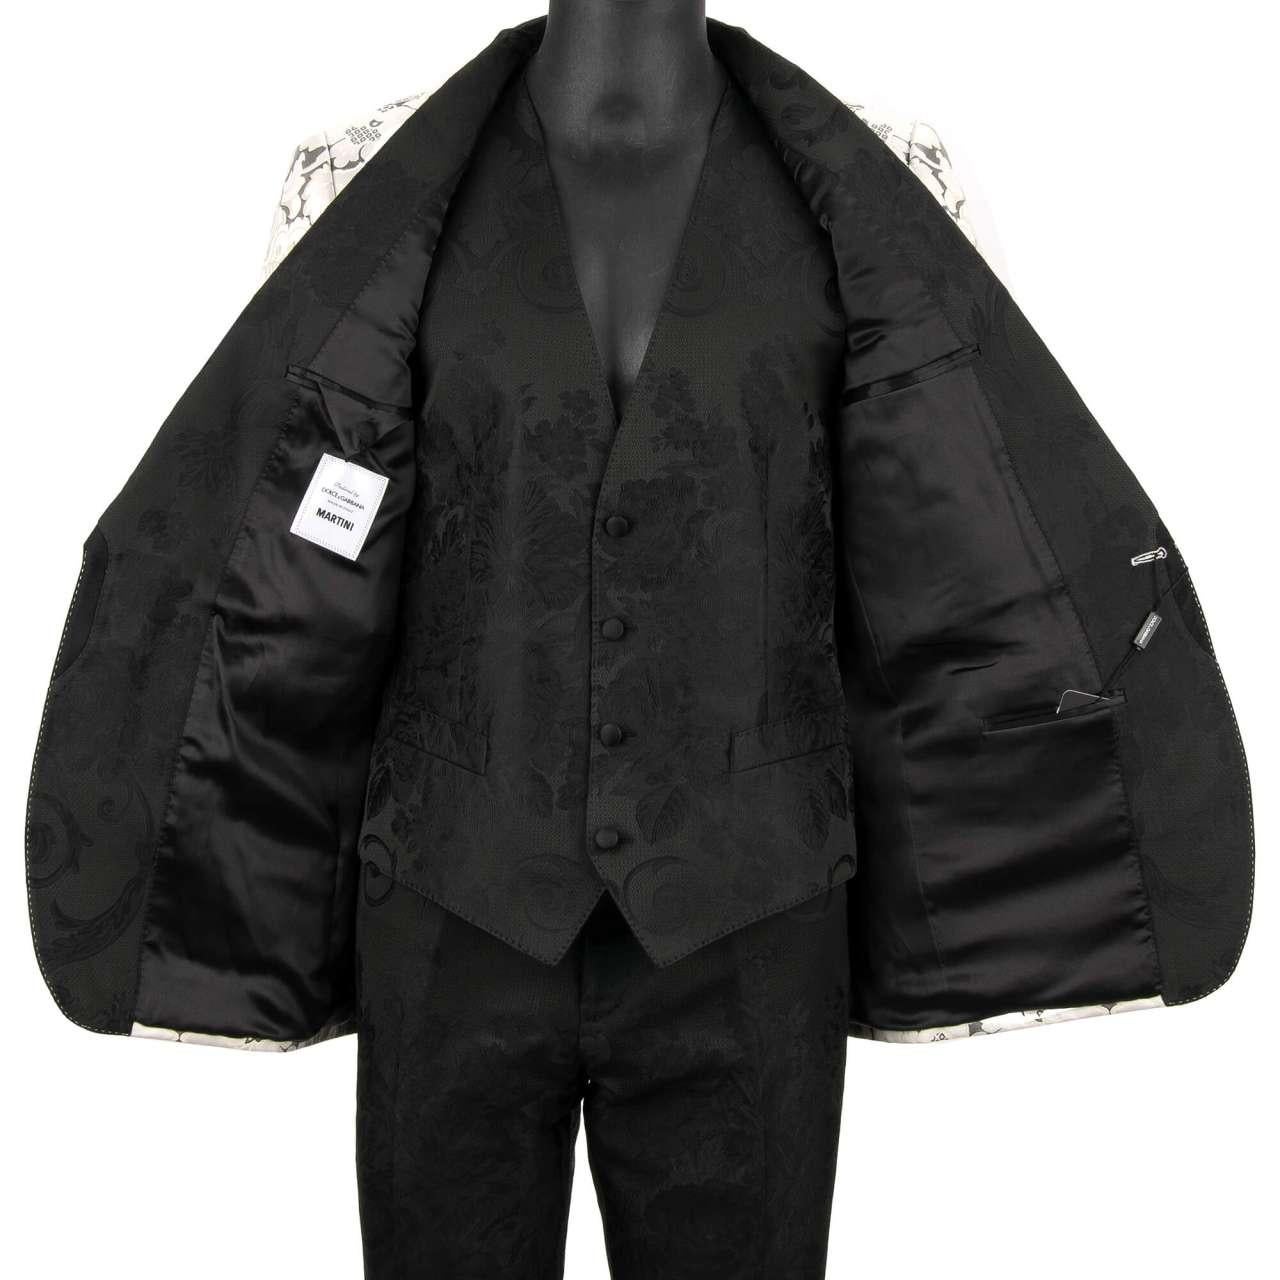 D&G Baroque 3 Piece Jacquard Suit Jacket Waistcoat MARTINI White Black 54 In Excellent Condition For Sale In Erkrath, DE